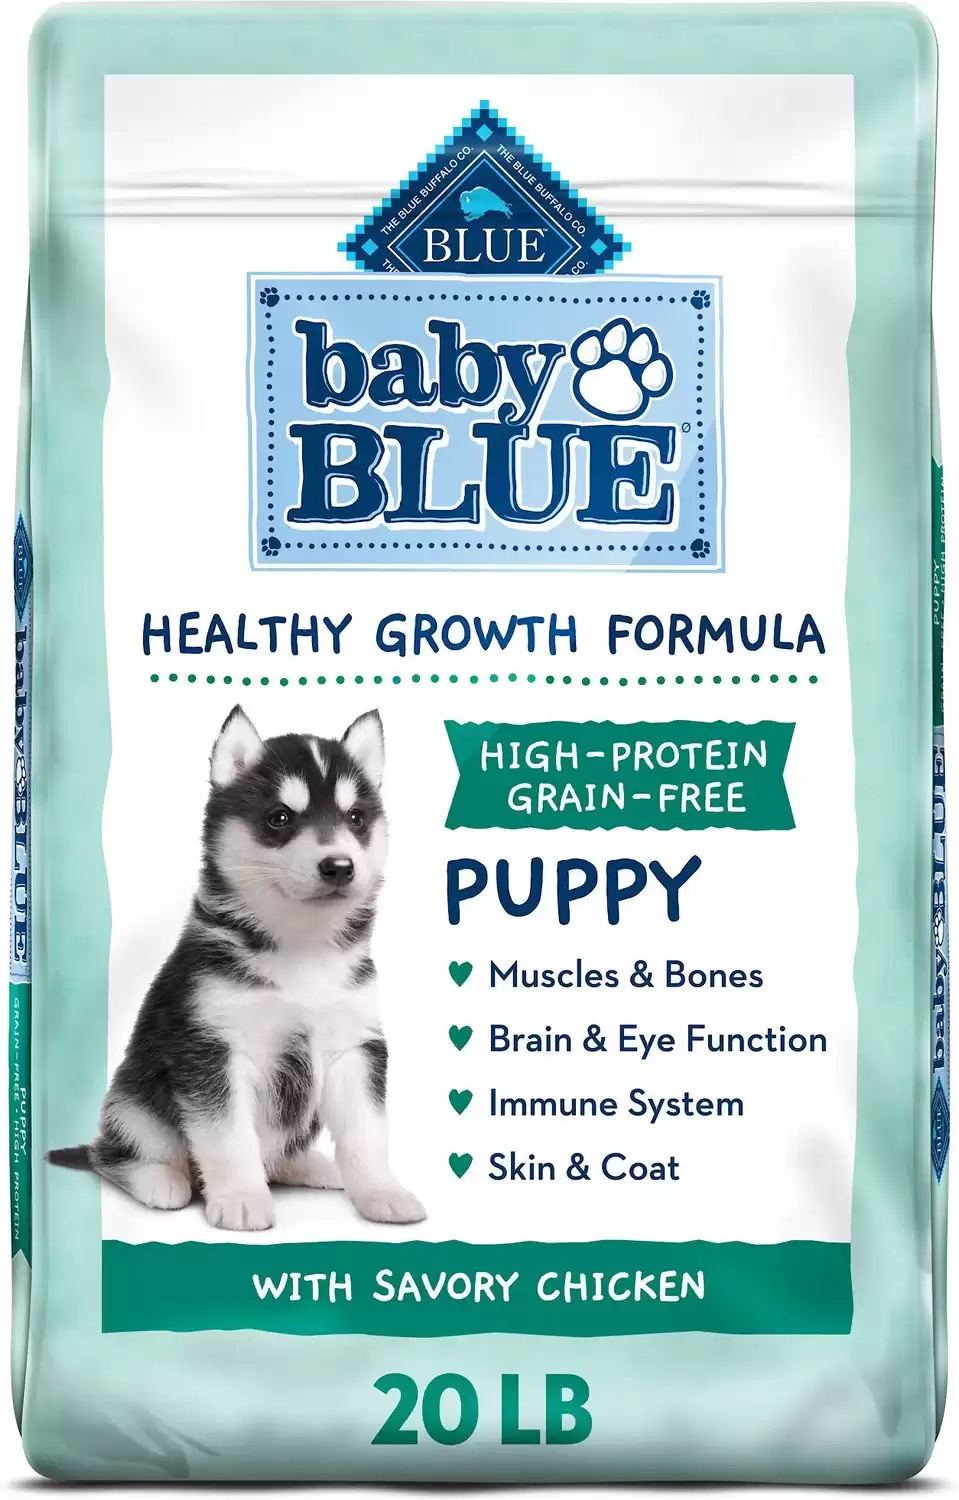 Blue Buffalo Baby BLUE High Protein Grain-Free